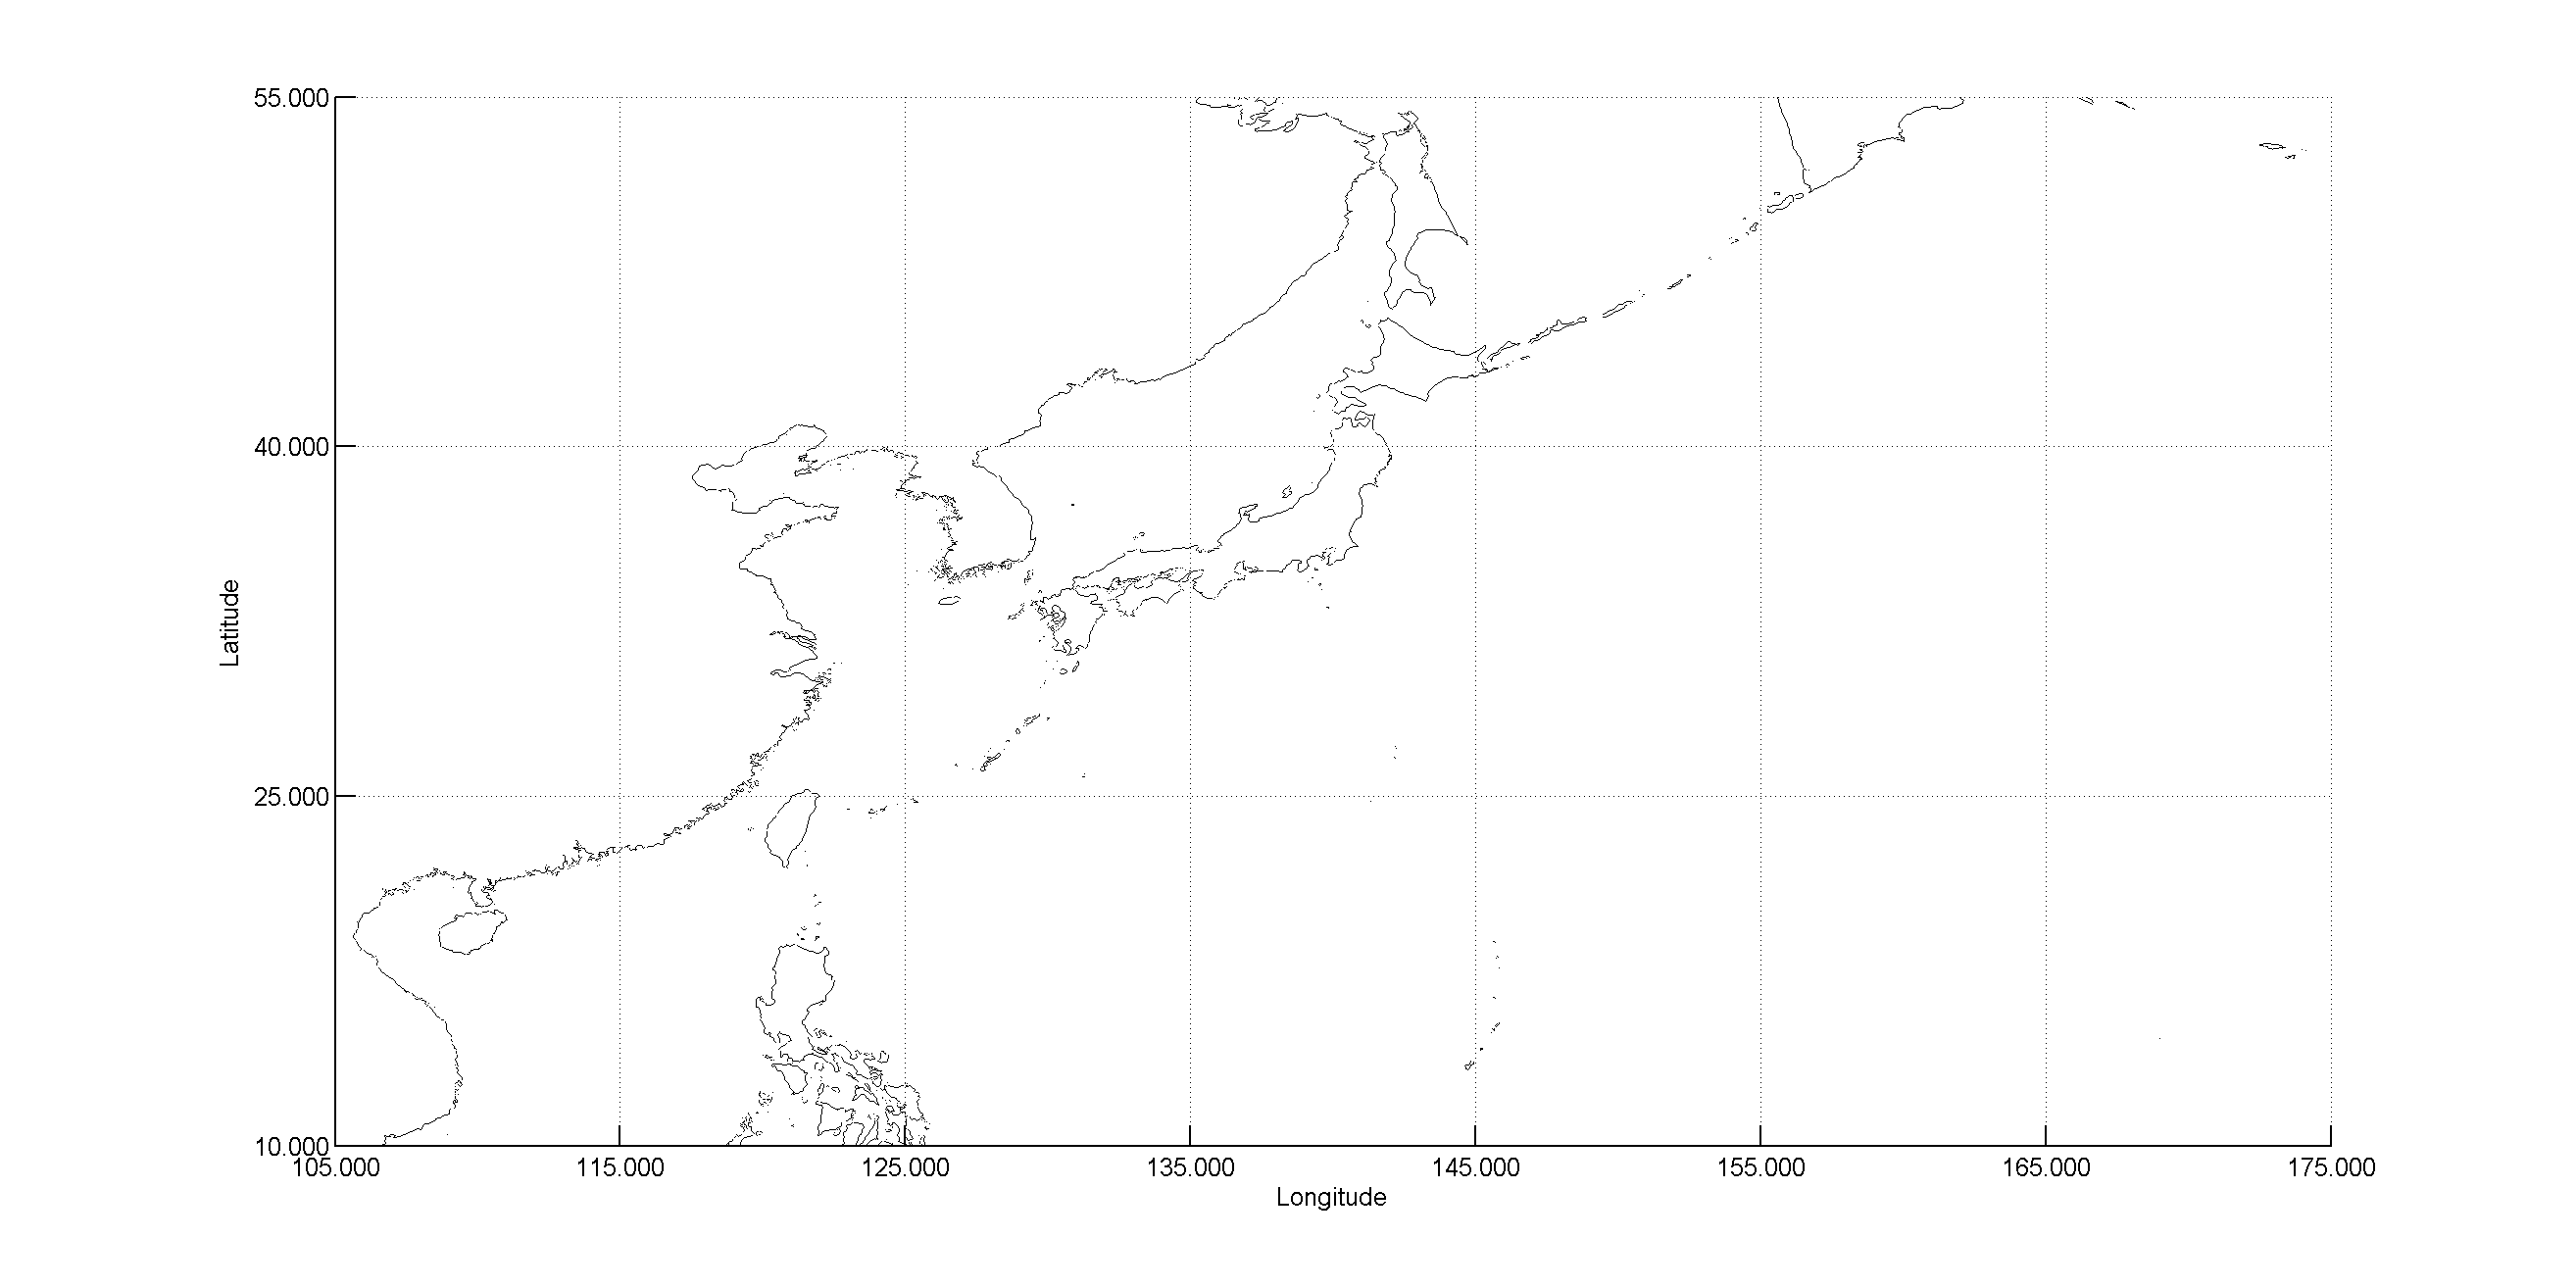 CYCLE_170 - Japan Descending passes